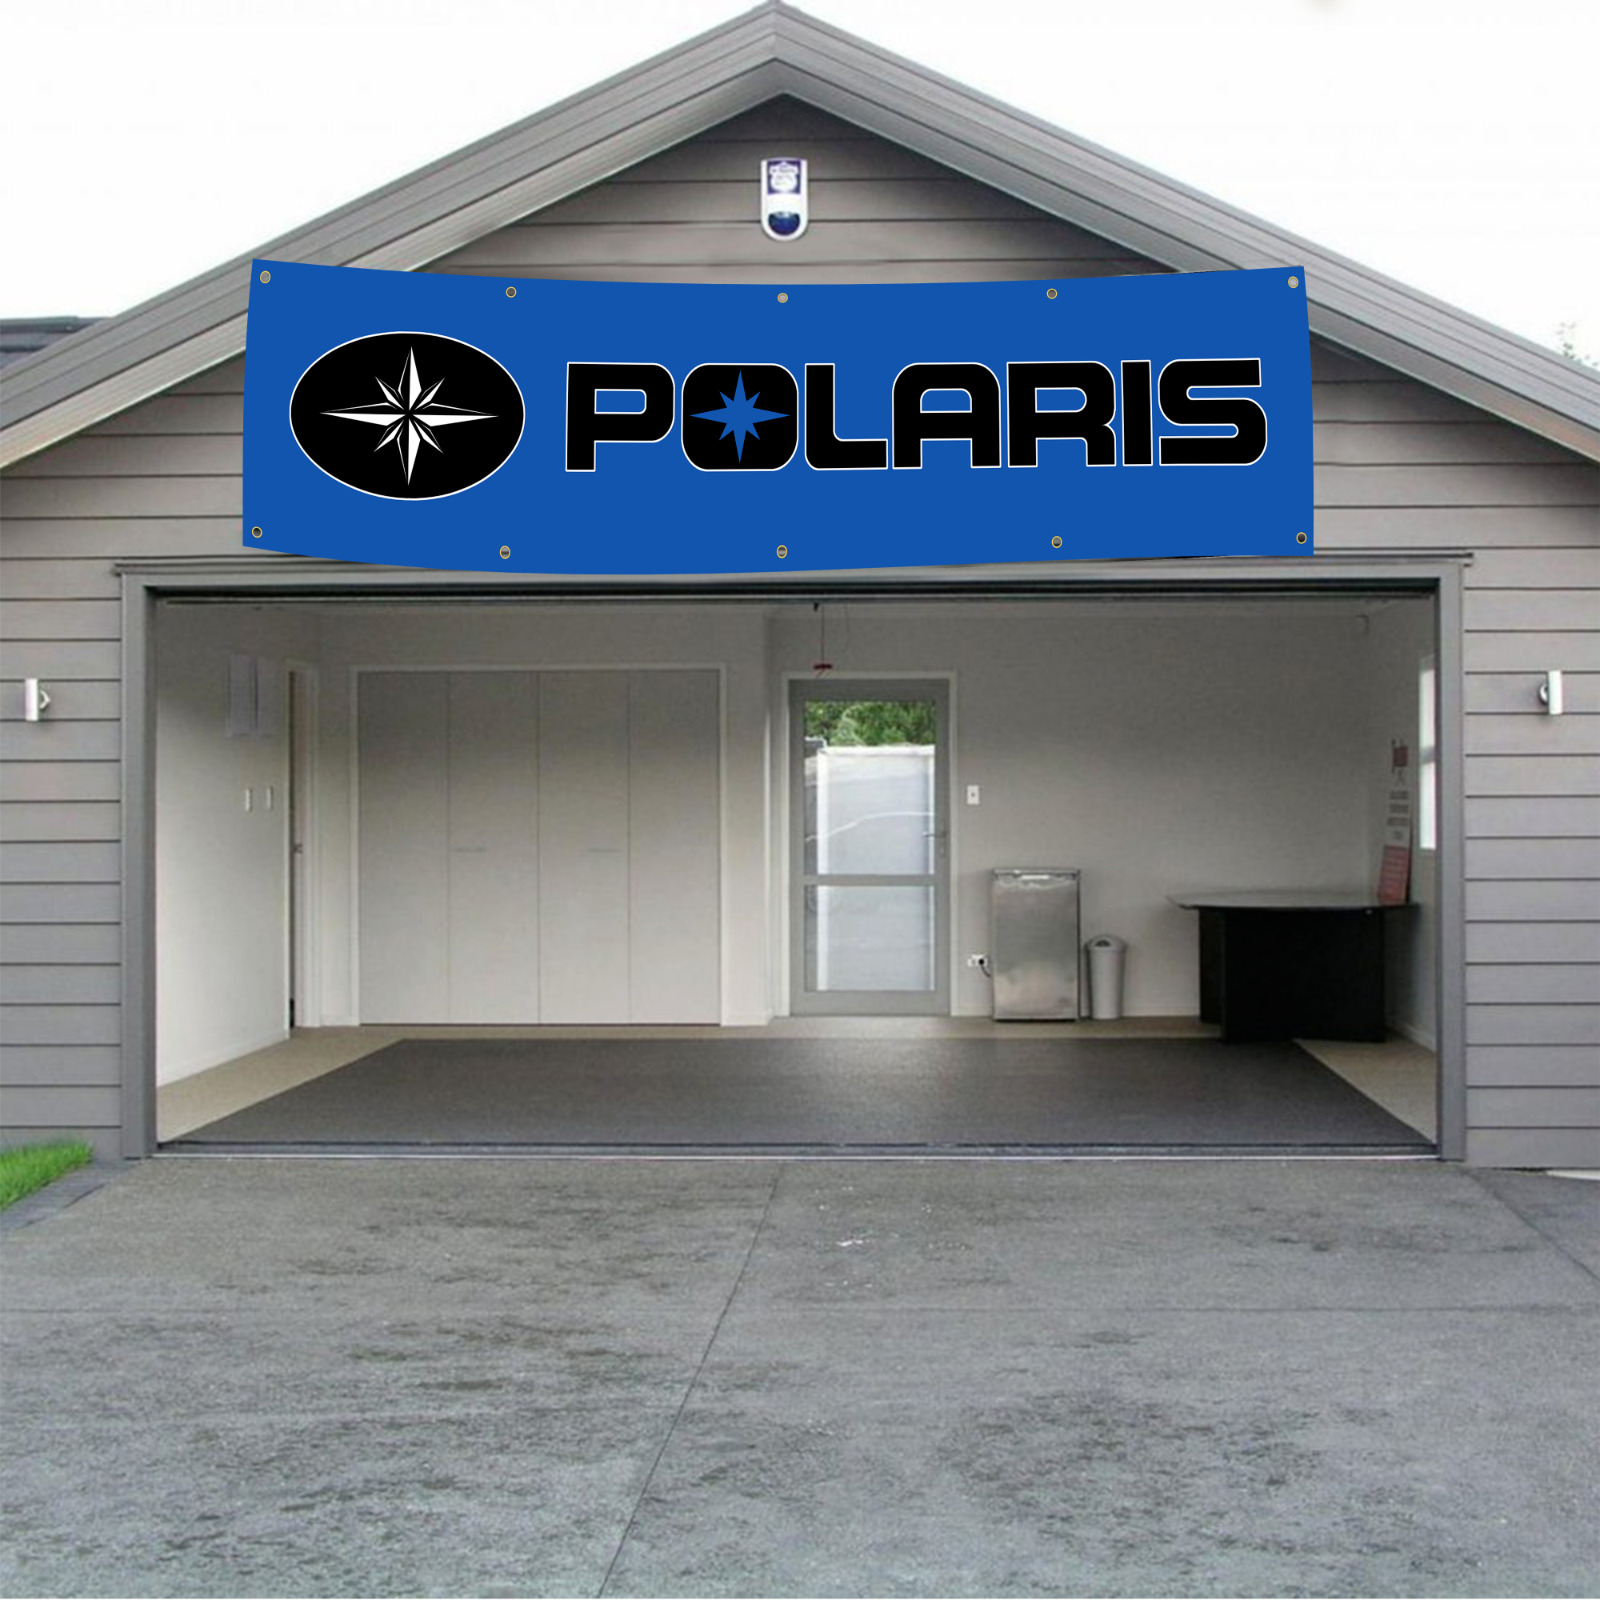 Polaris Snowmobile Banner 2x8 FT Racing Car Show Flags Garage Shop Wall Decor US